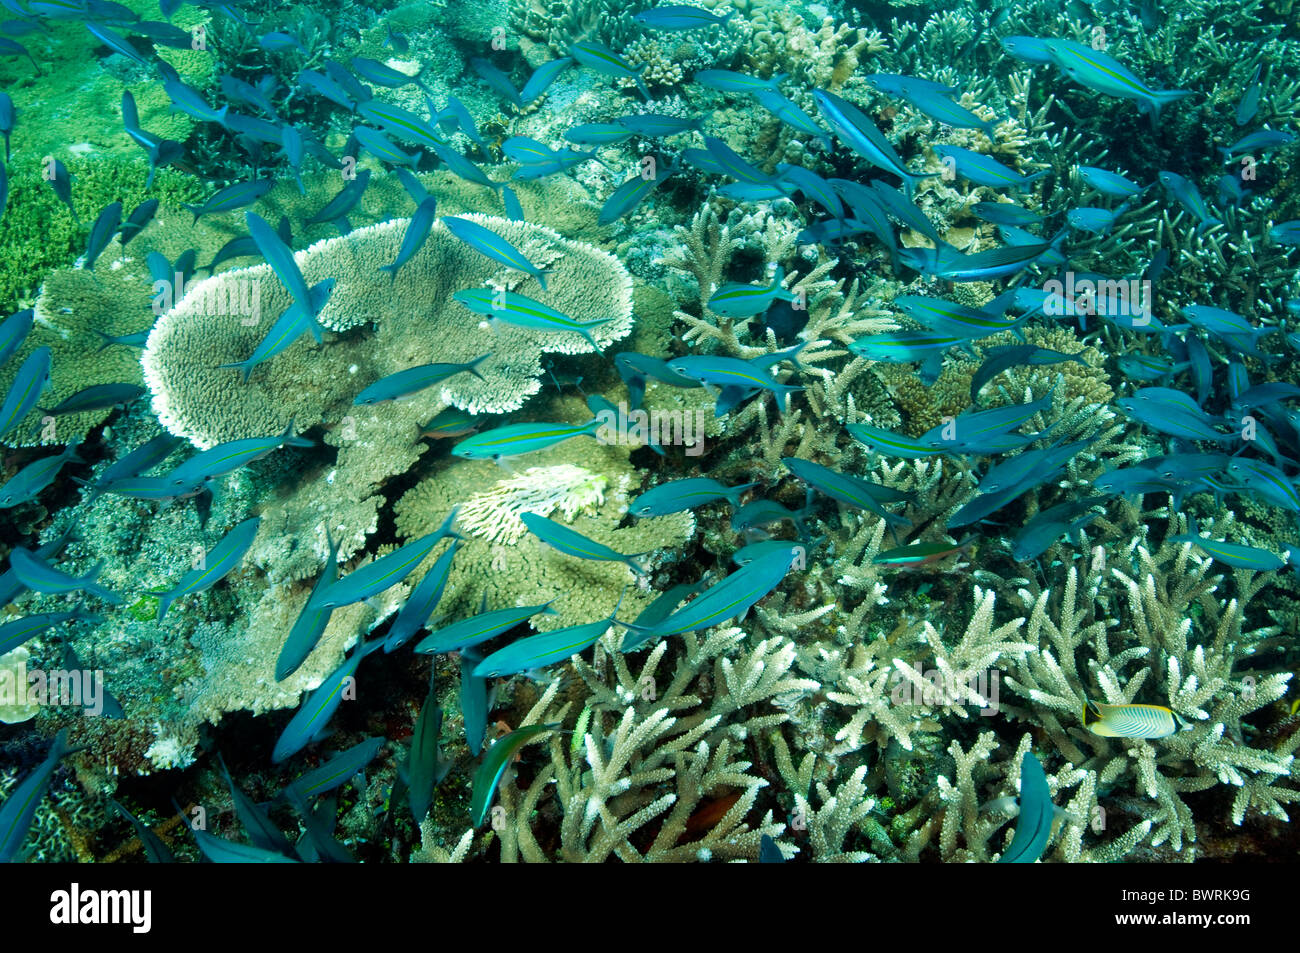 Fusiliers over hard corals Raja Ampat Indonesia Stock Photo